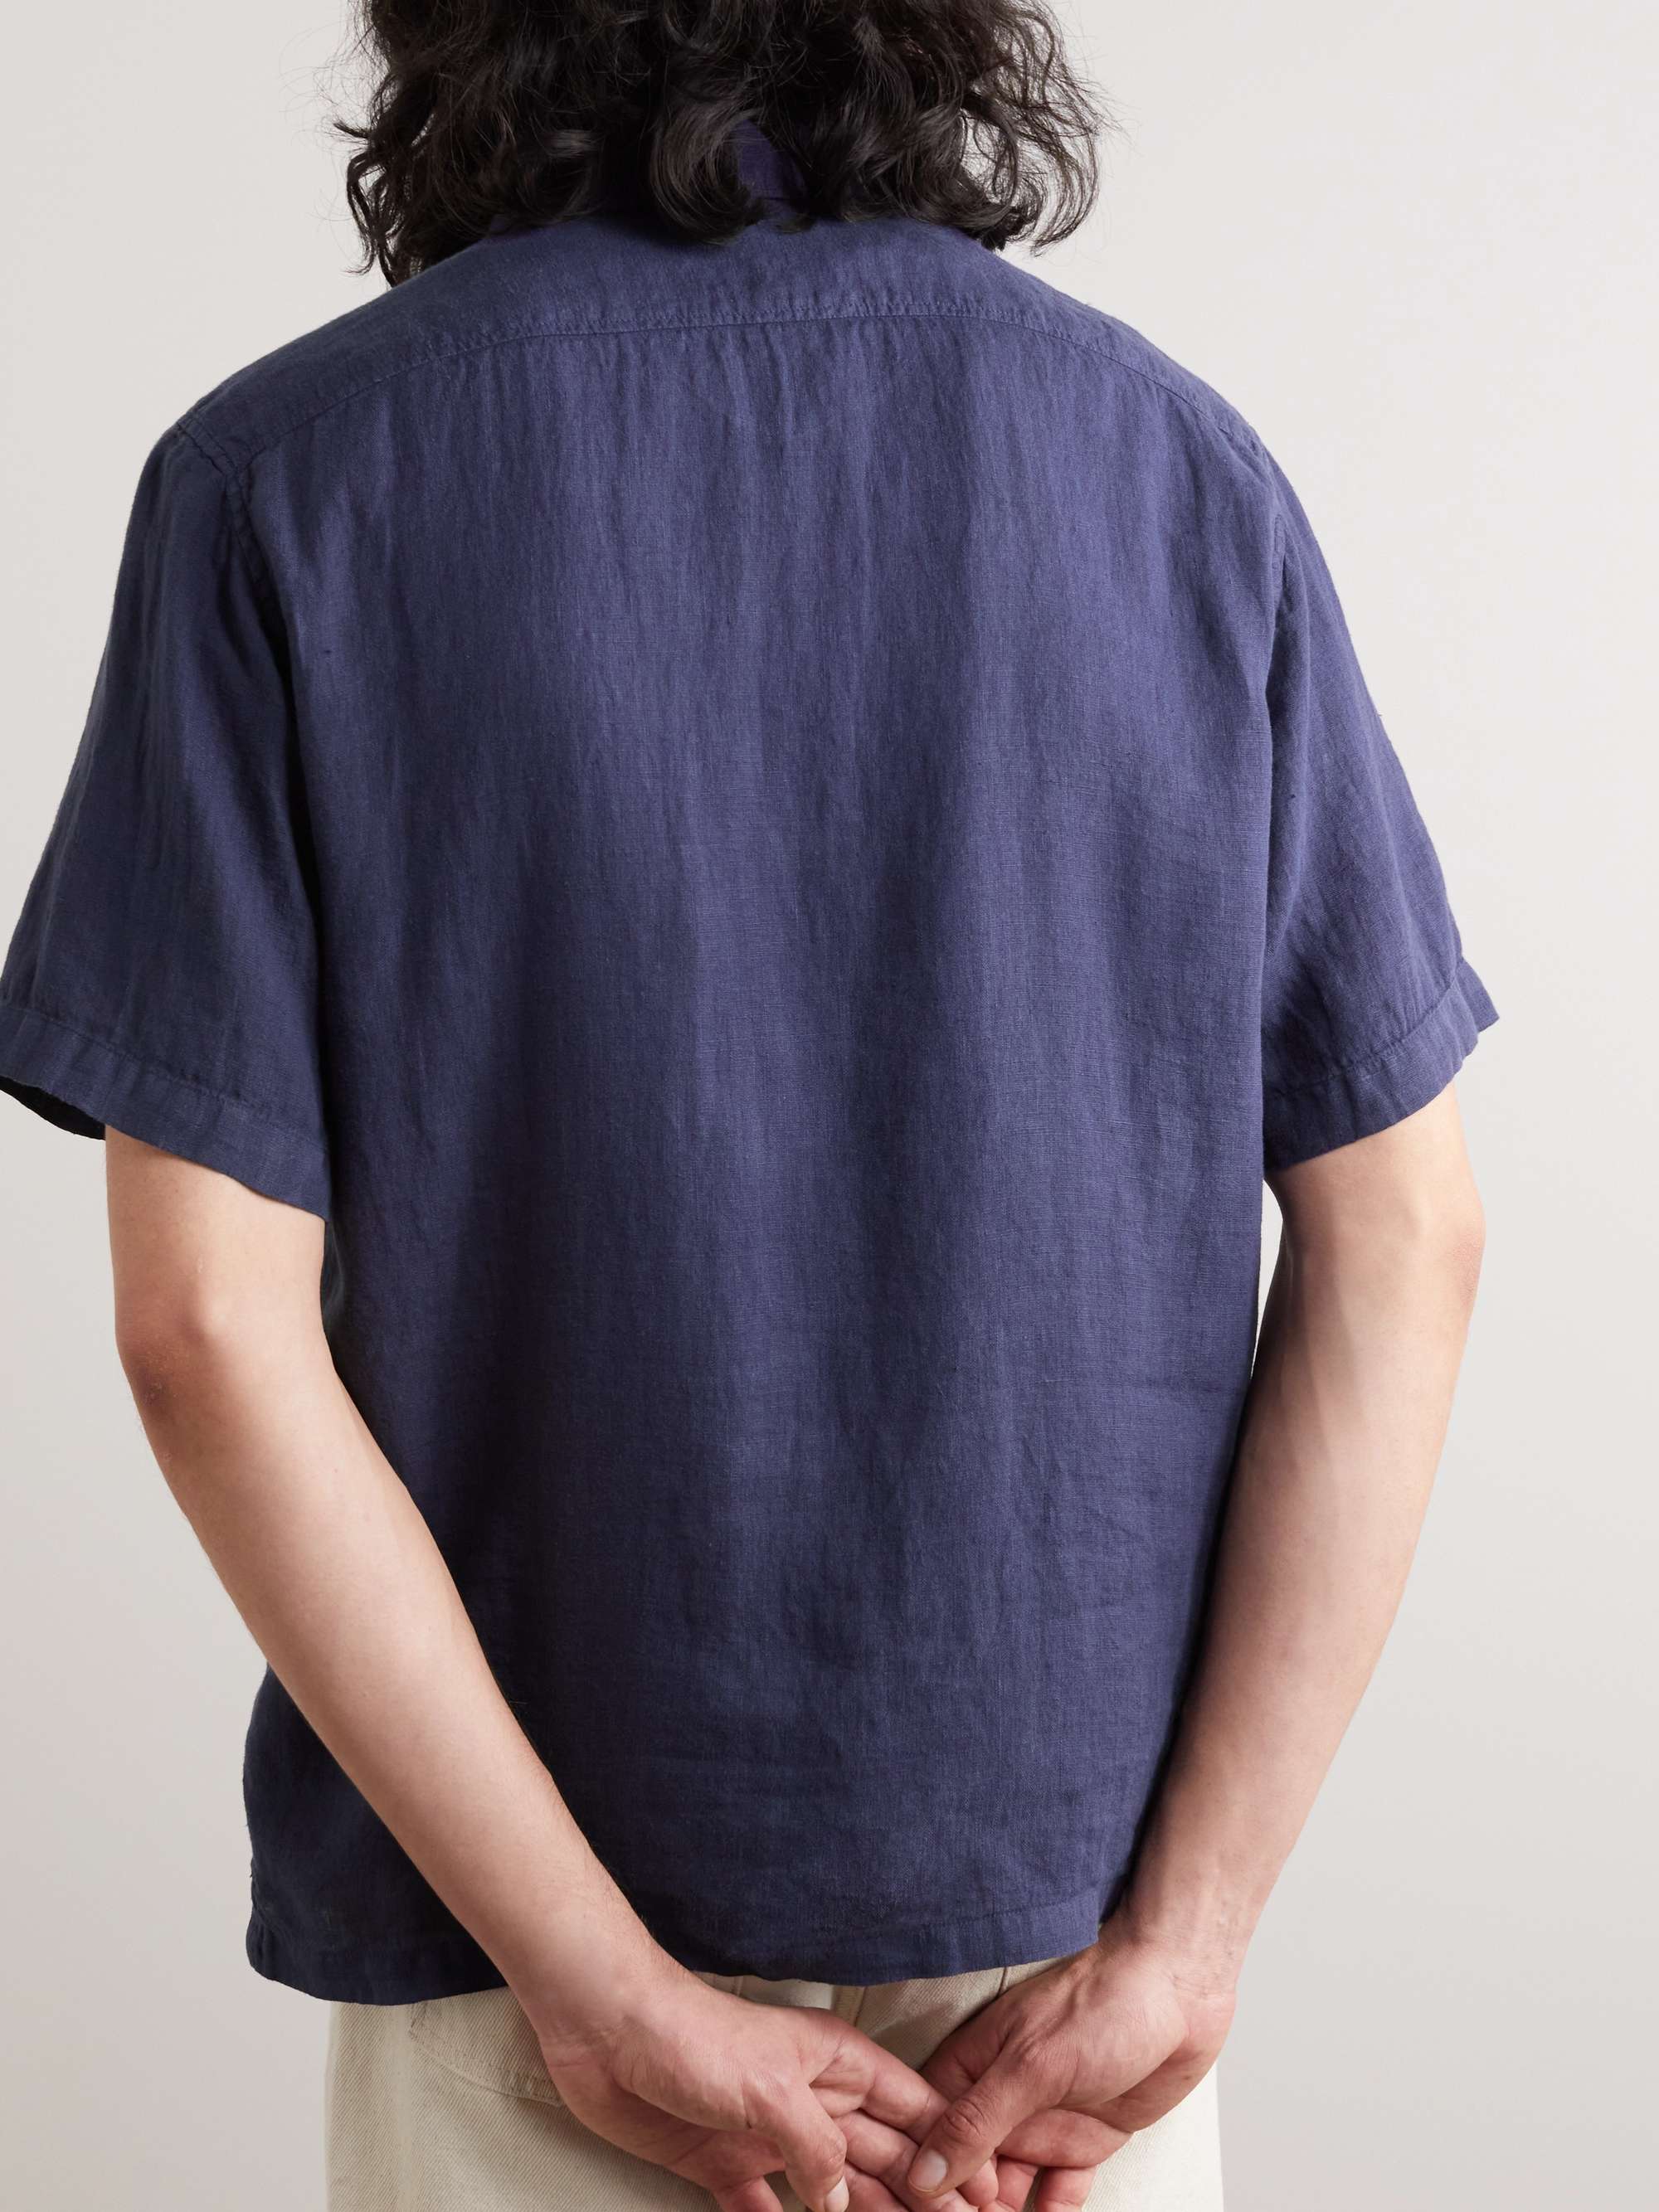 C.P. COMPANY Linen Shirt